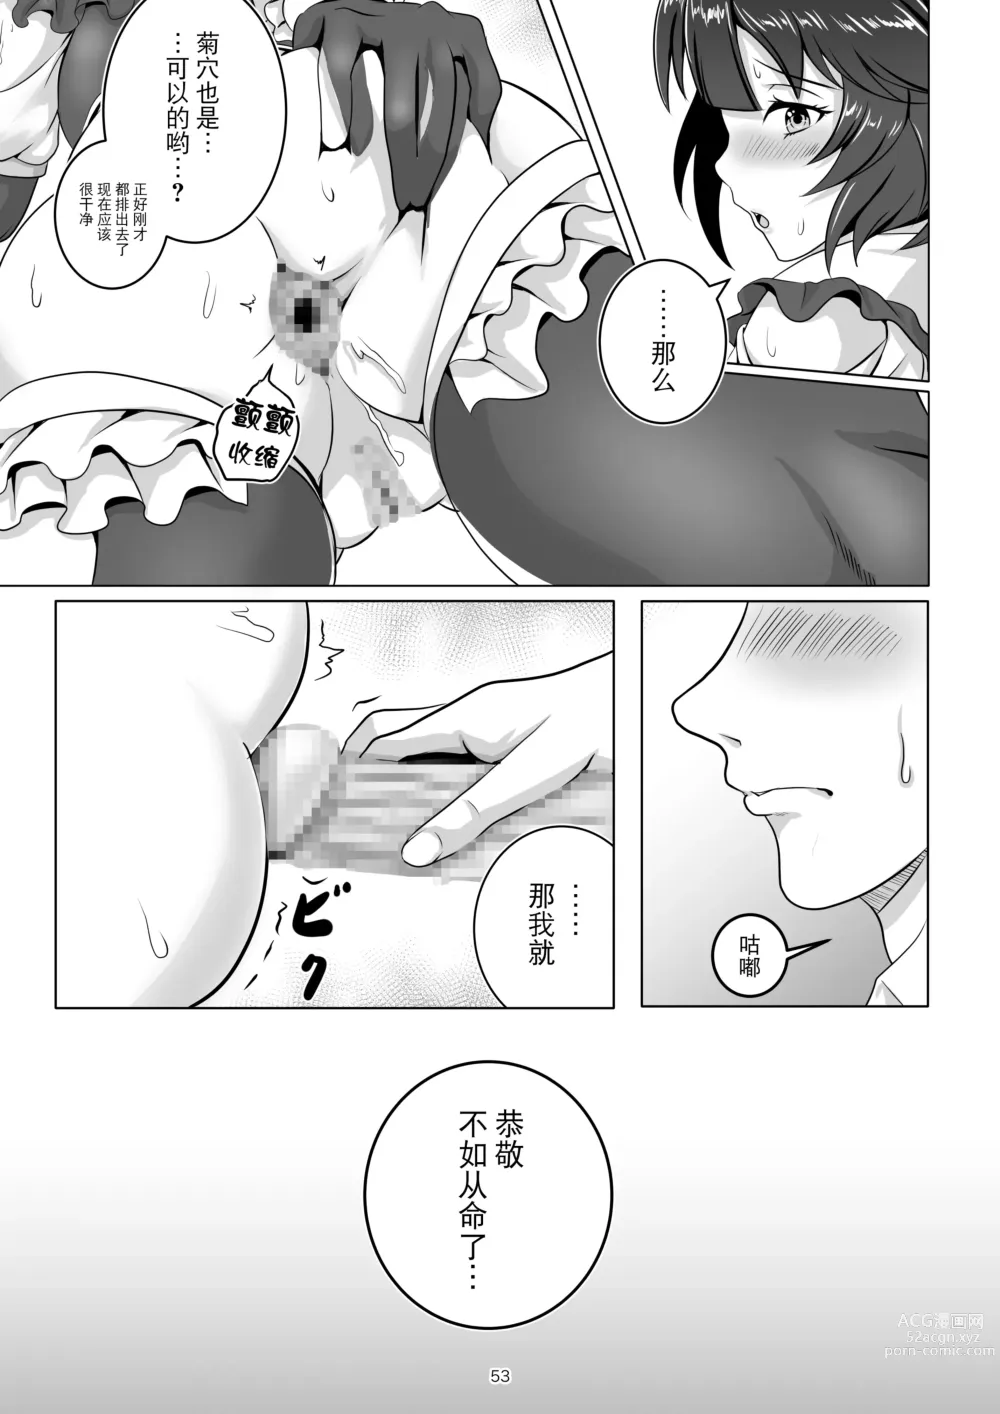 Page 53 of doujinshi Bunny x Baito Party